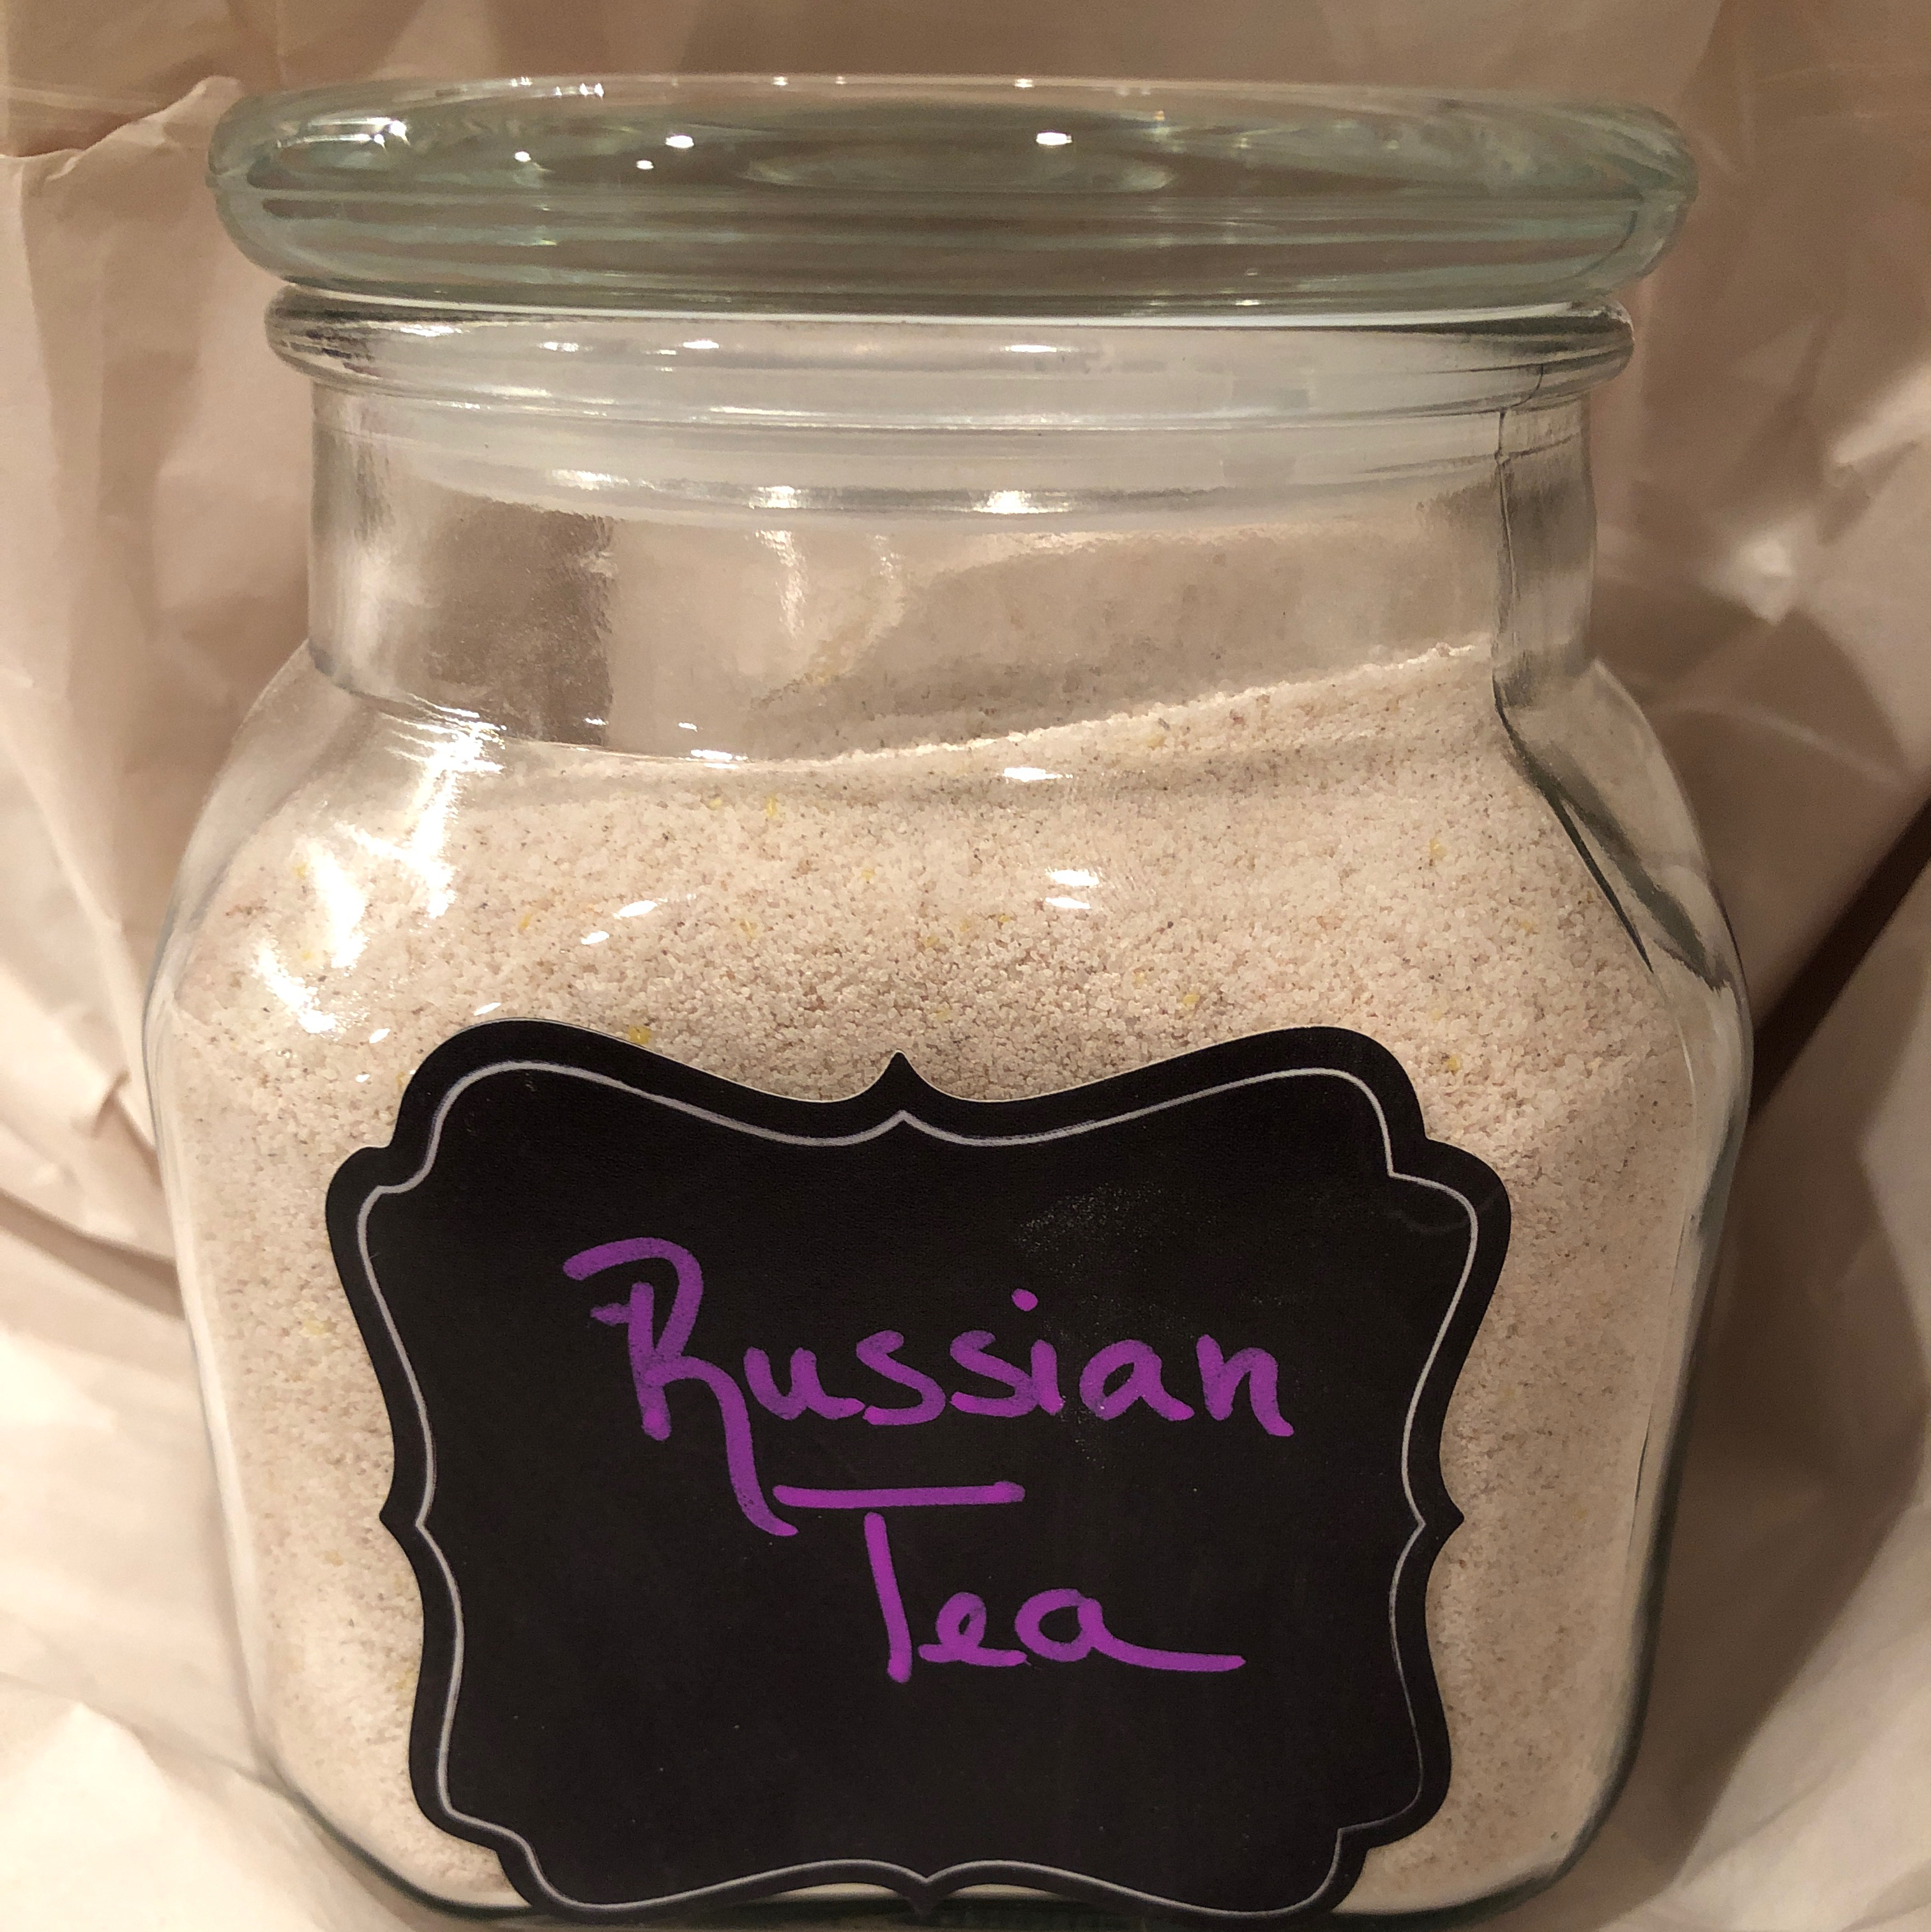 Russian Tea image